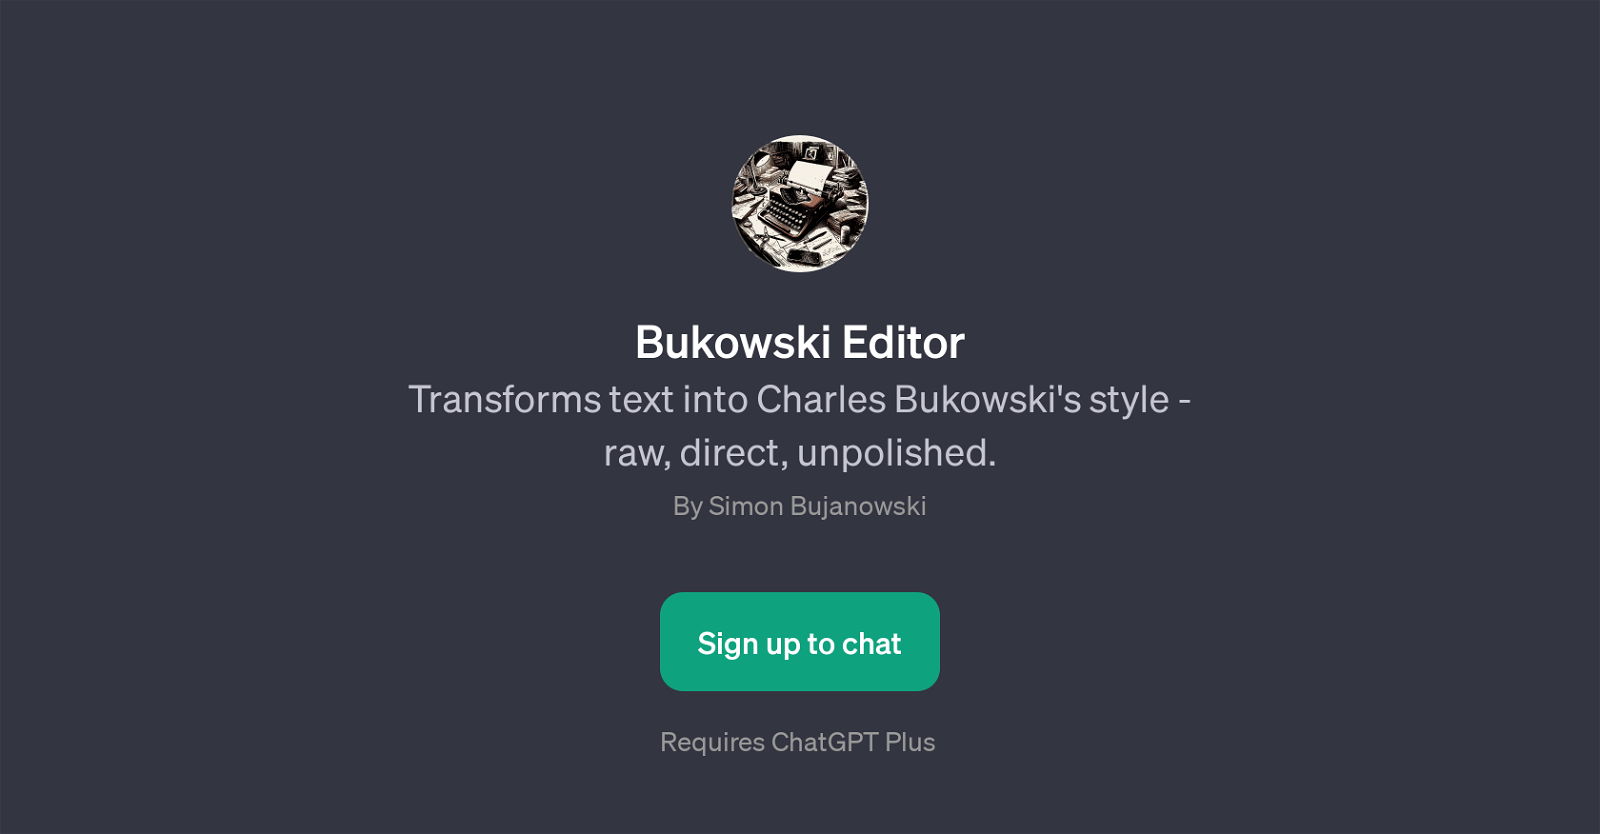 Bukowski Editor website